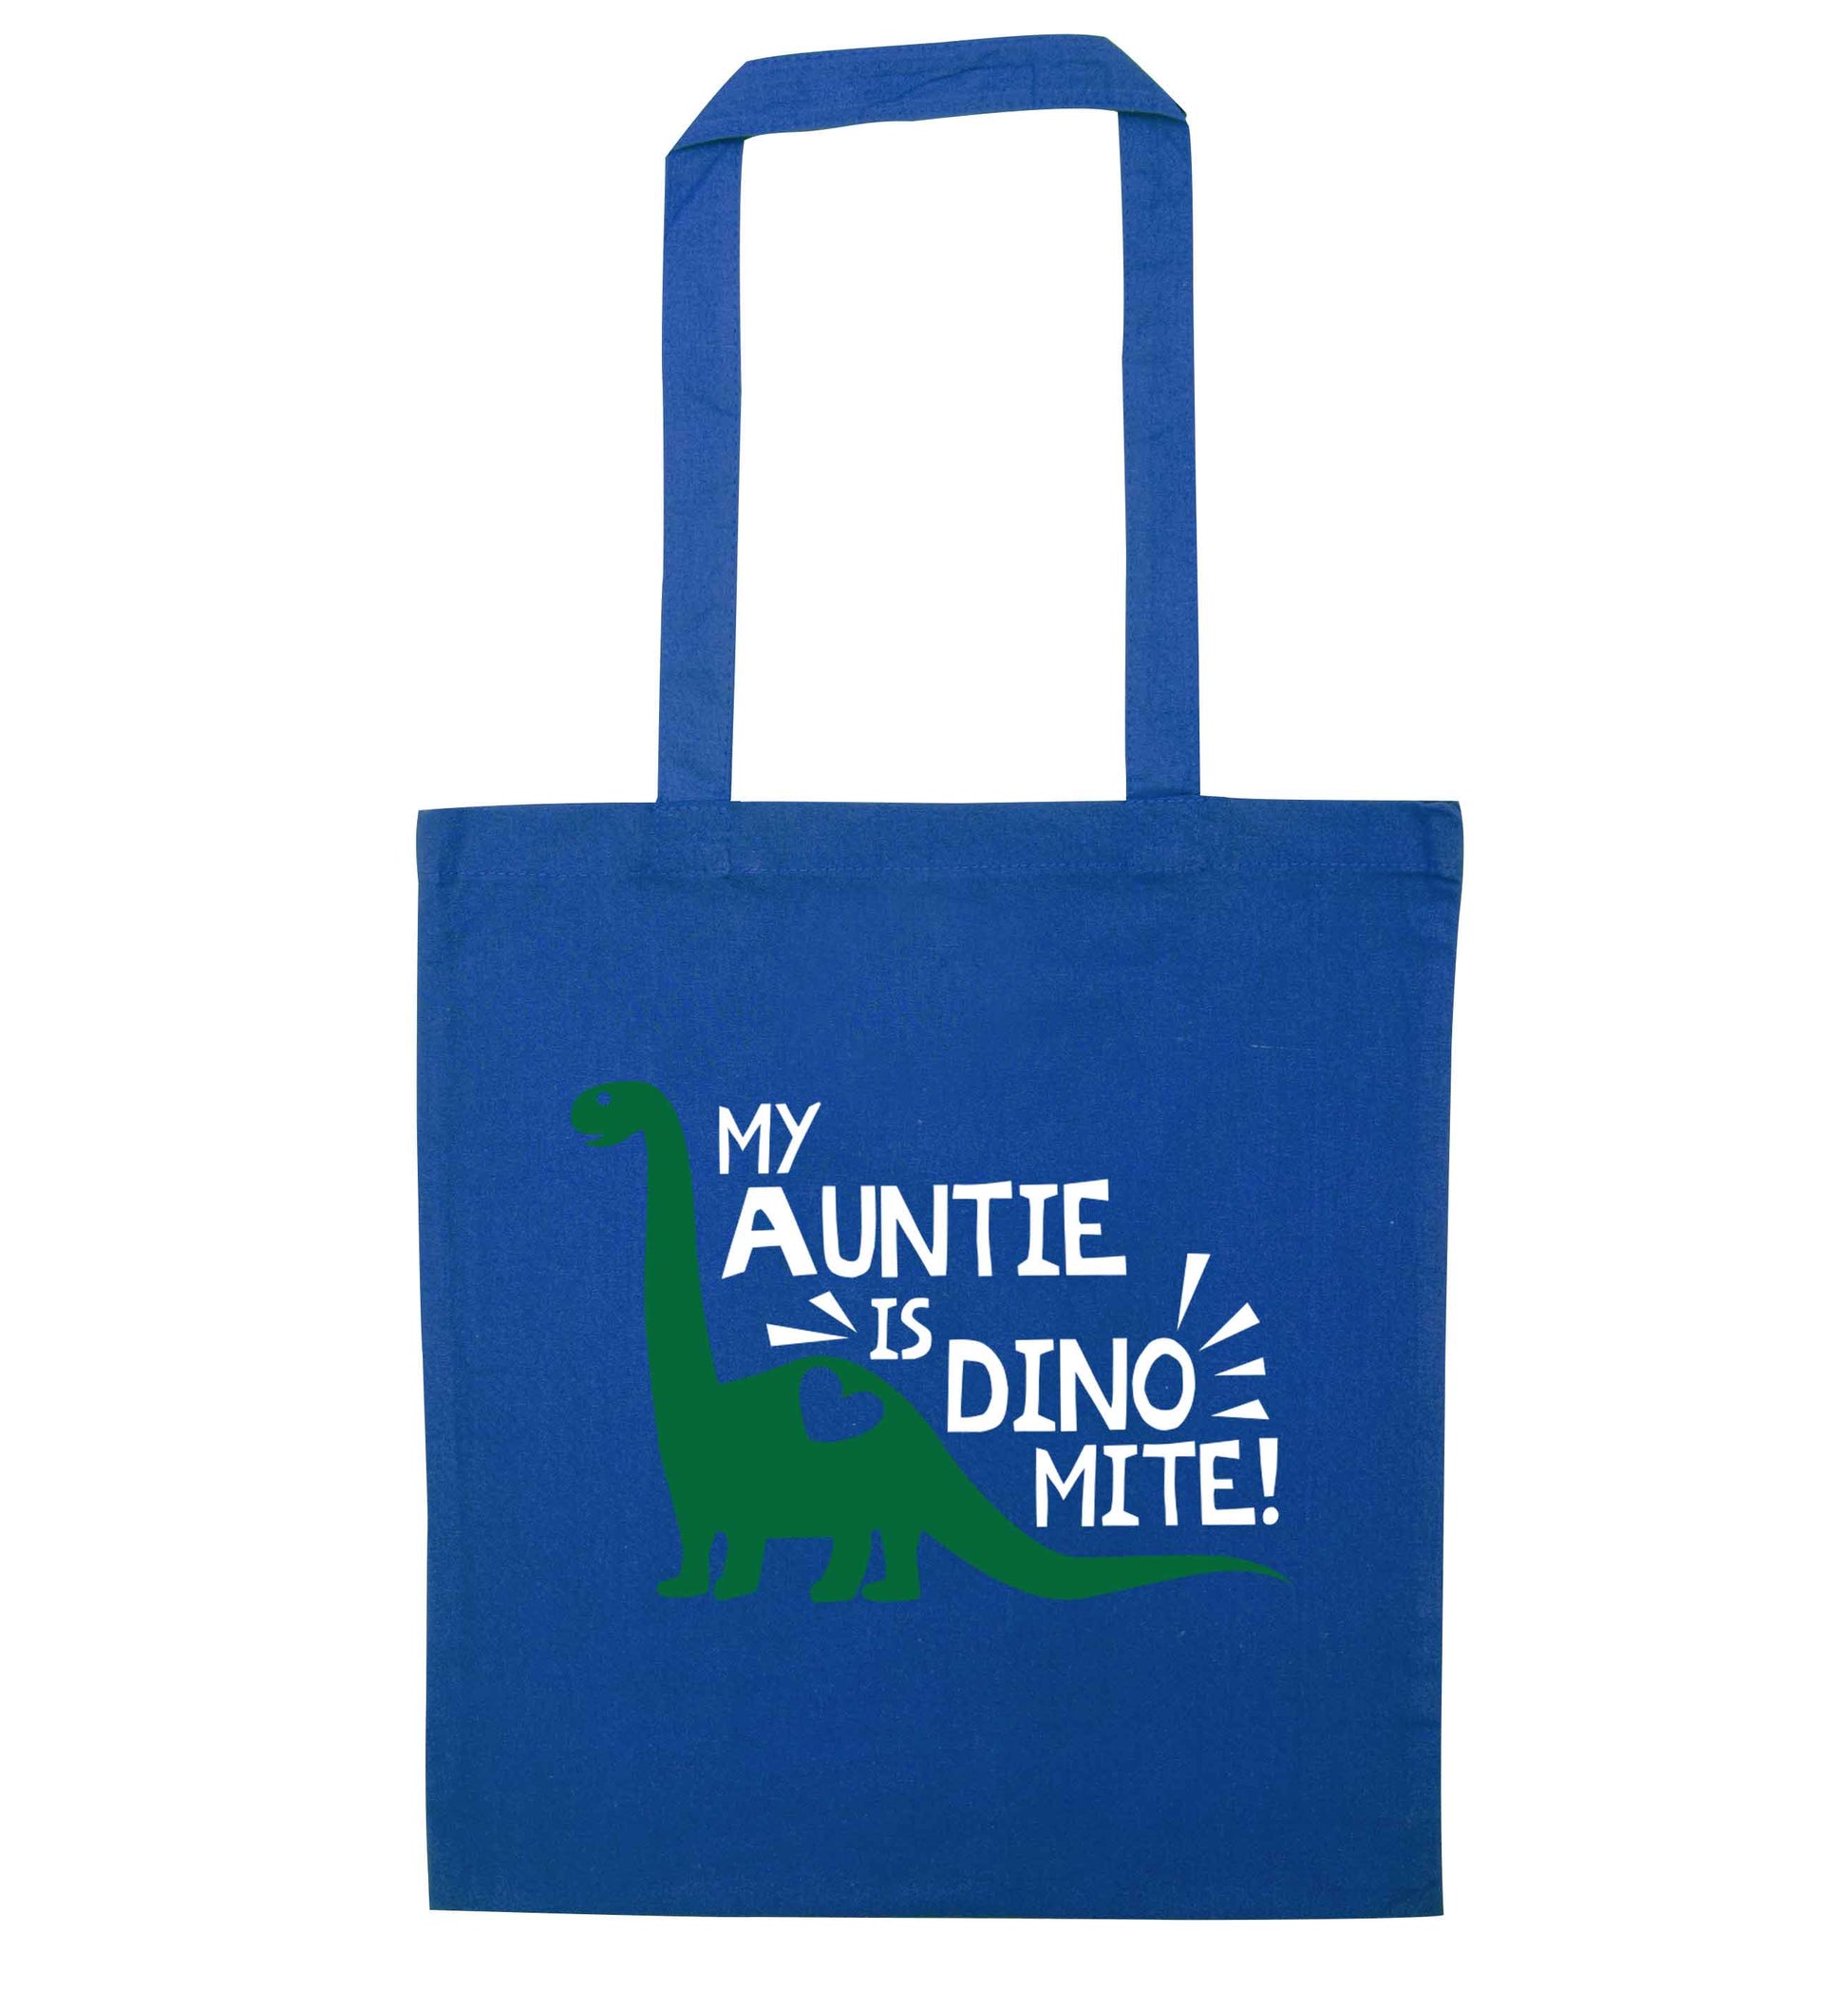 My auntie is dinomite! blue tote bag